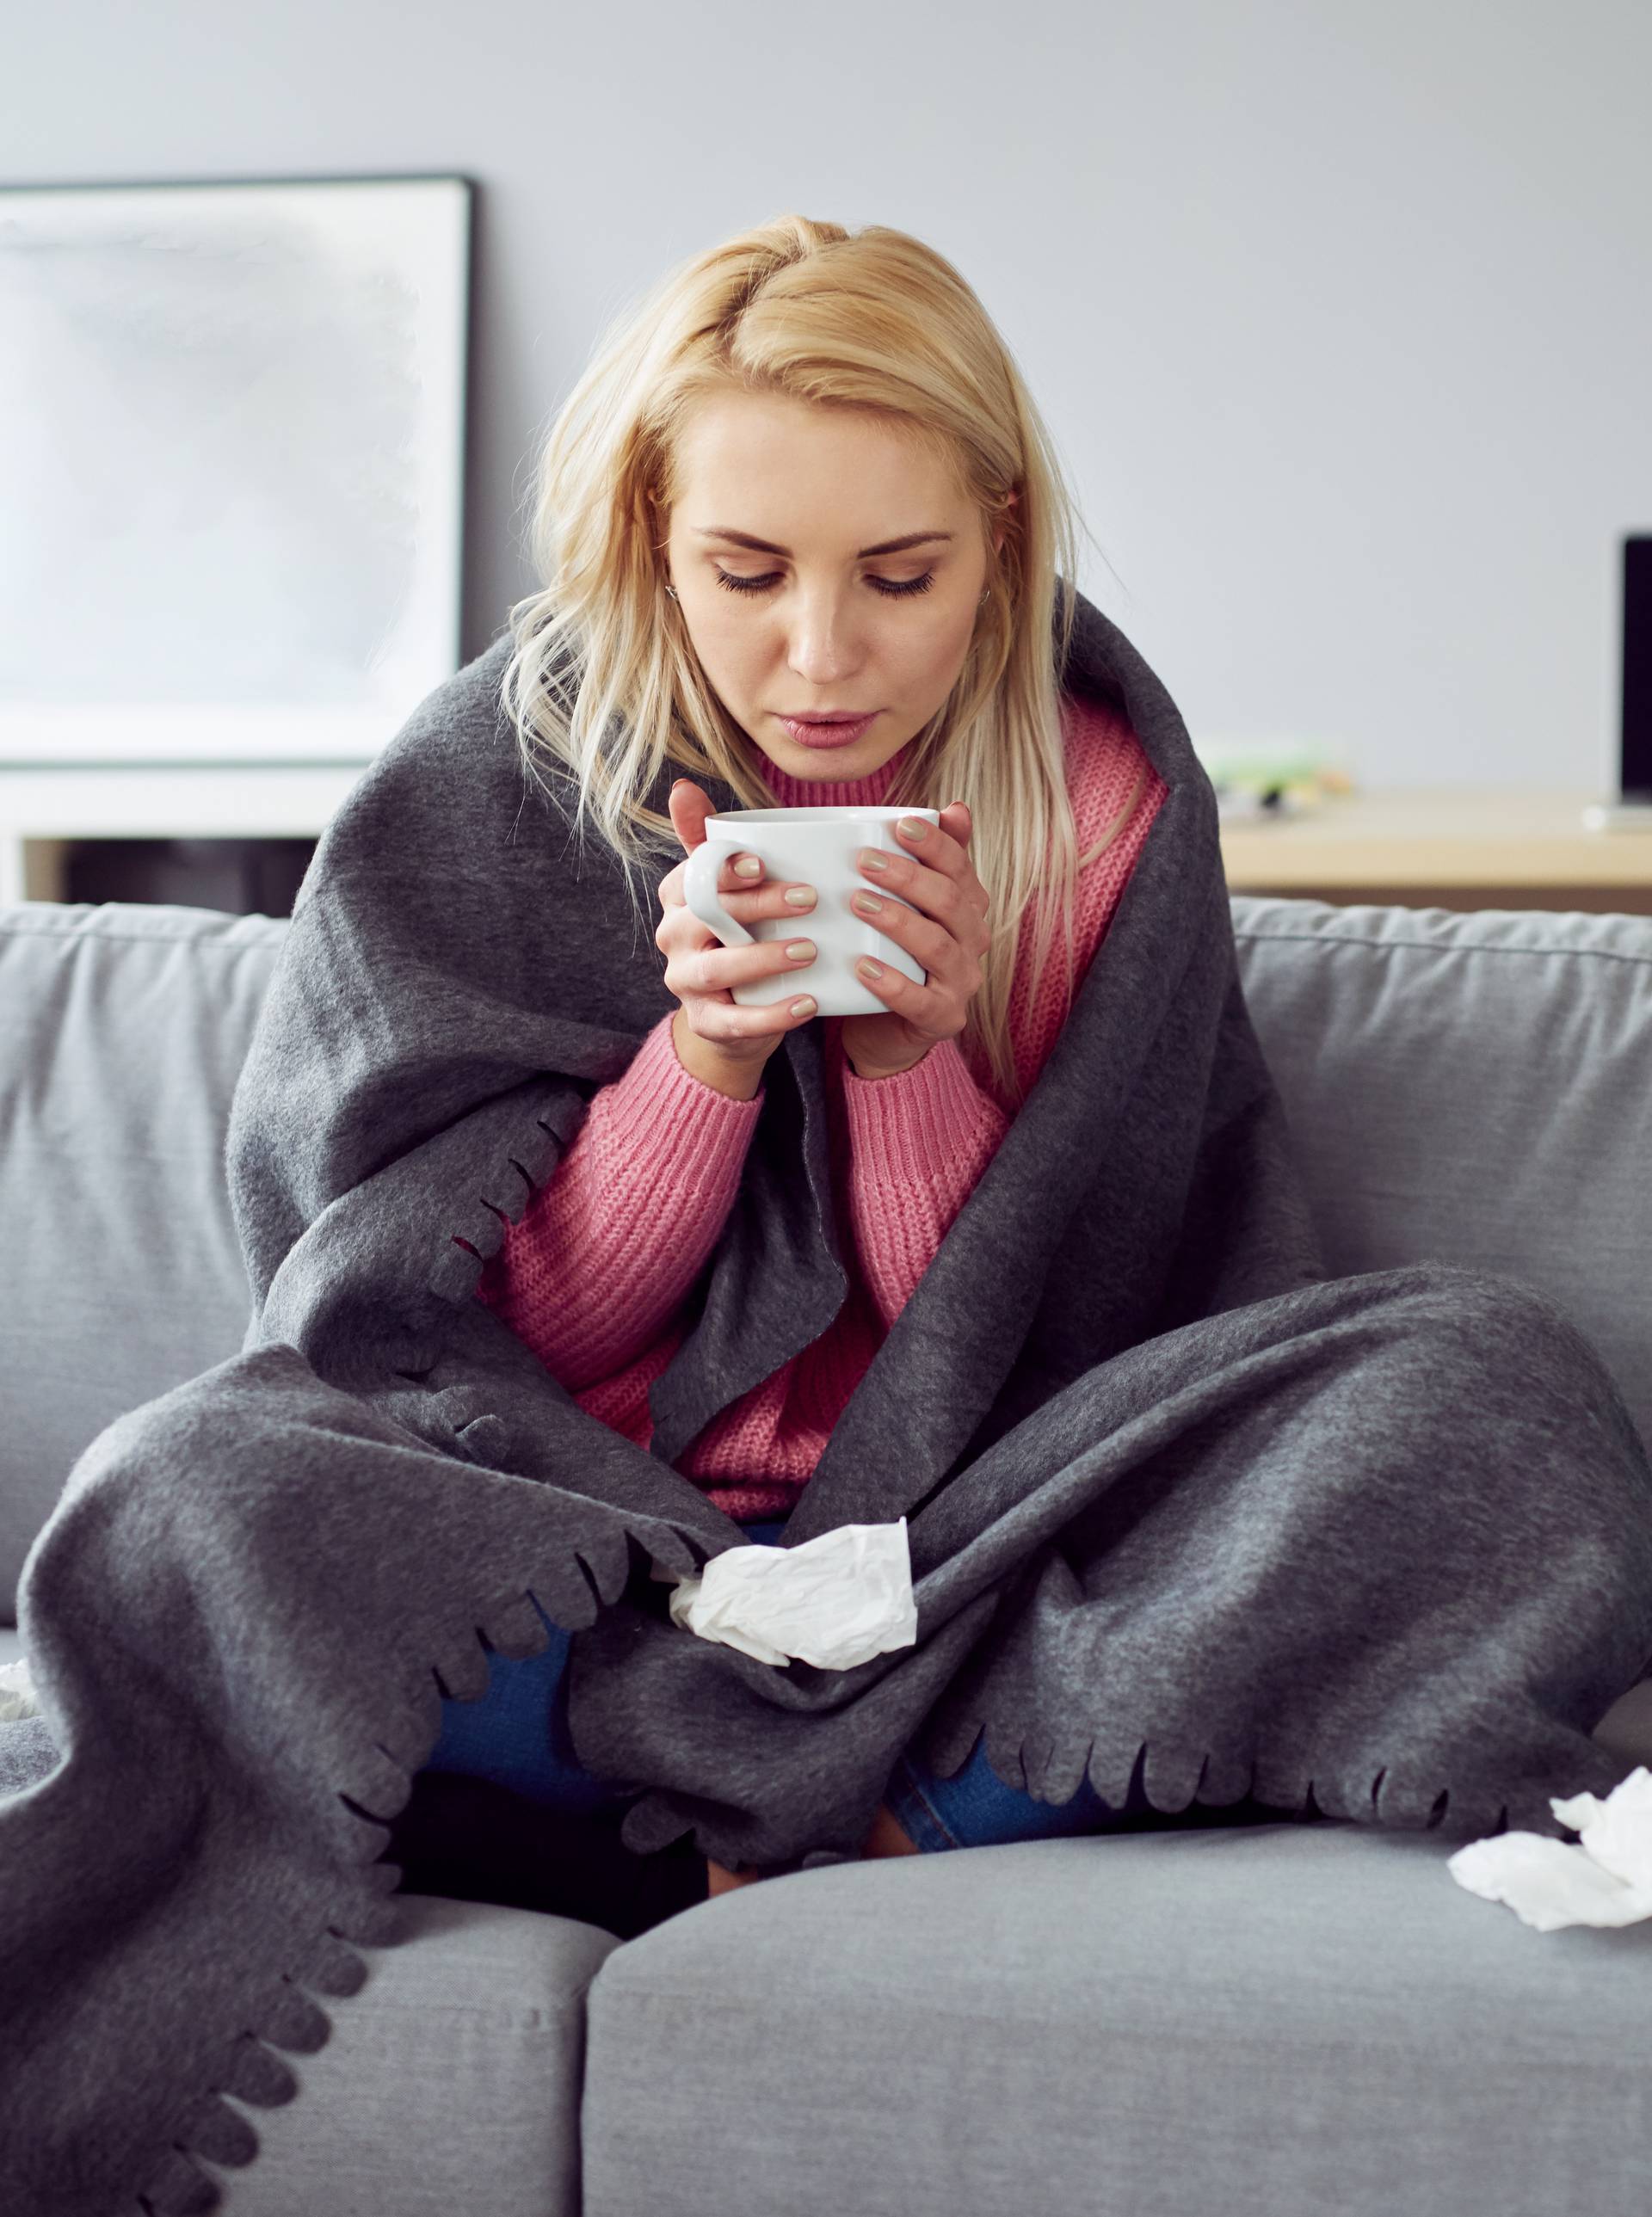 Young sick woman sitting on sofa drinking tea